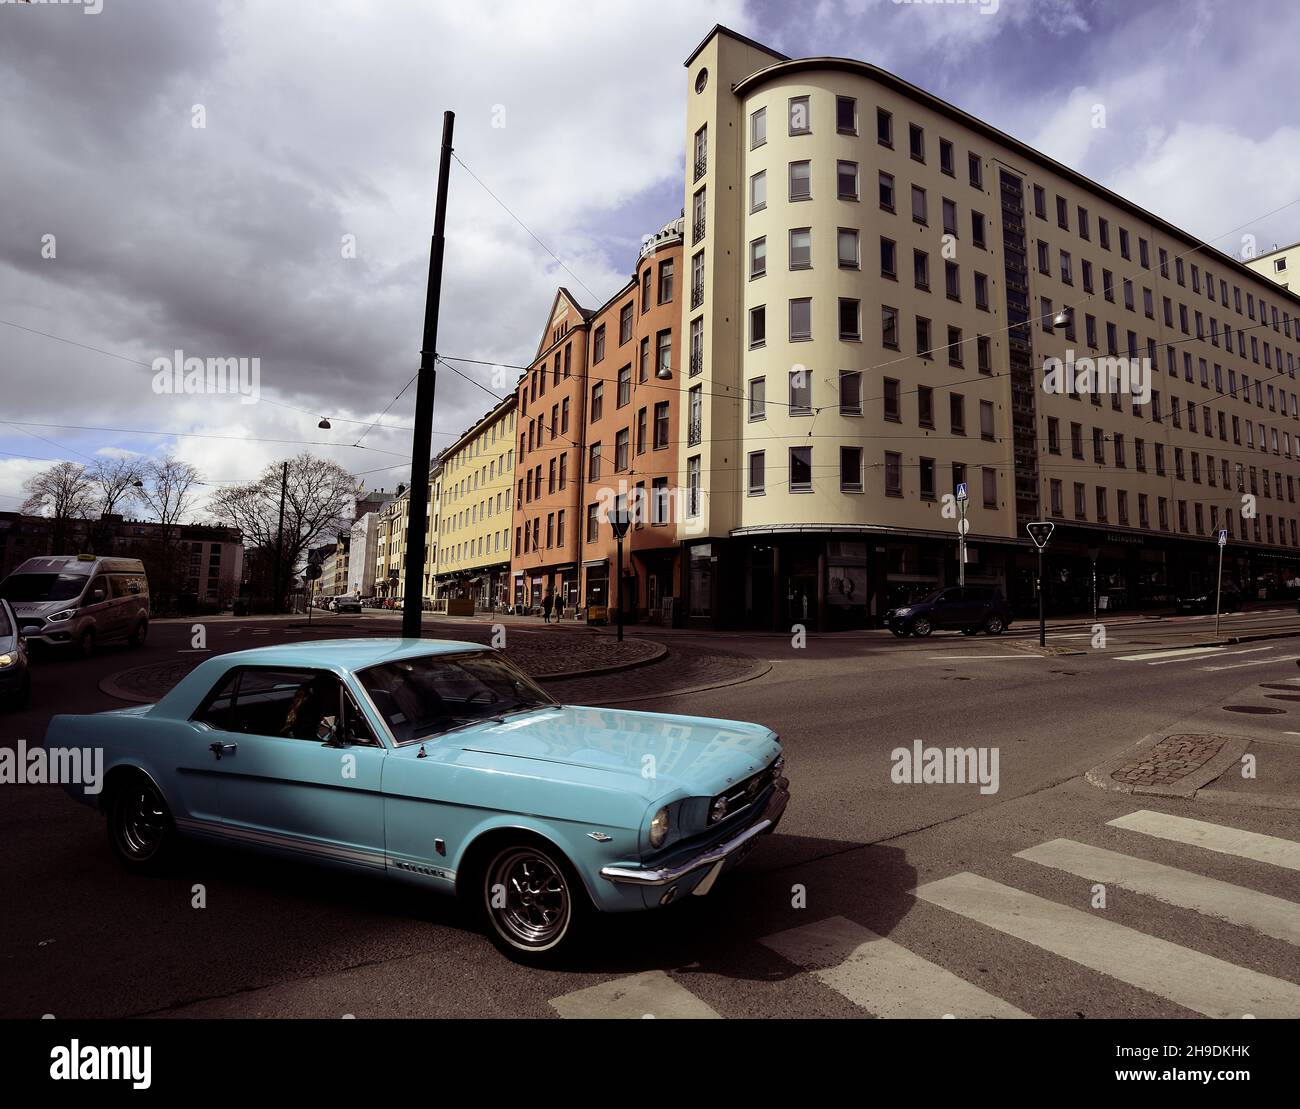 Helsinki, Finland – April 29, 2021: vintage mustang car on the street of Helsinki, Finland Stock Photo